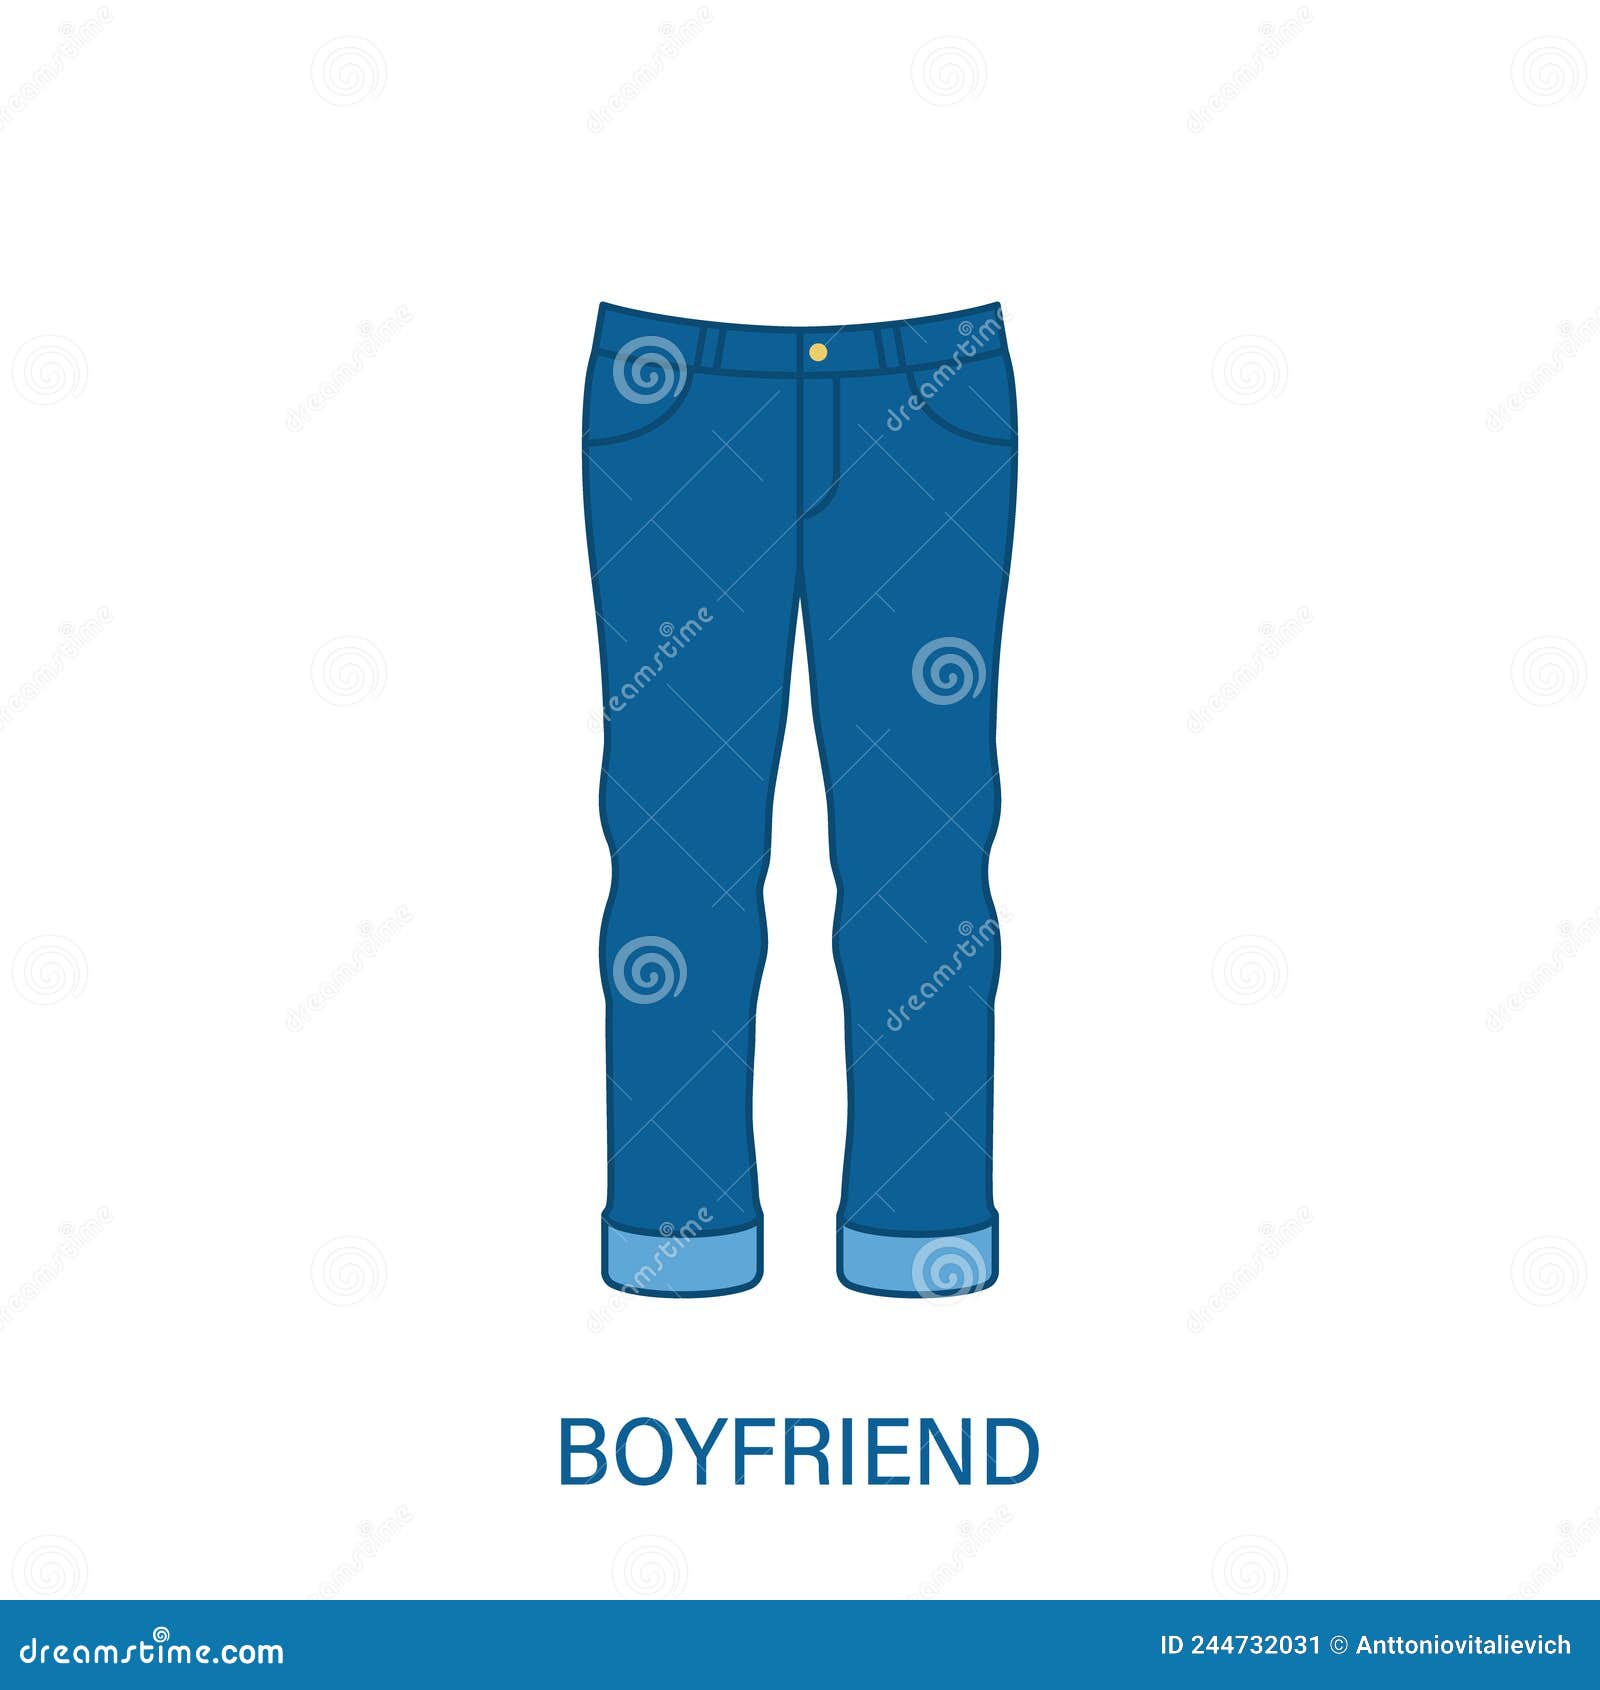 https://thumbs.dreamstime.com/z/mujer-novio-tipo-jeans-pantalones-silueta-icono-estilo-moderno-de-ropa-denim-para-mujeres-vestimenta-casual-moda-azul-hermoso-244732031.jpg